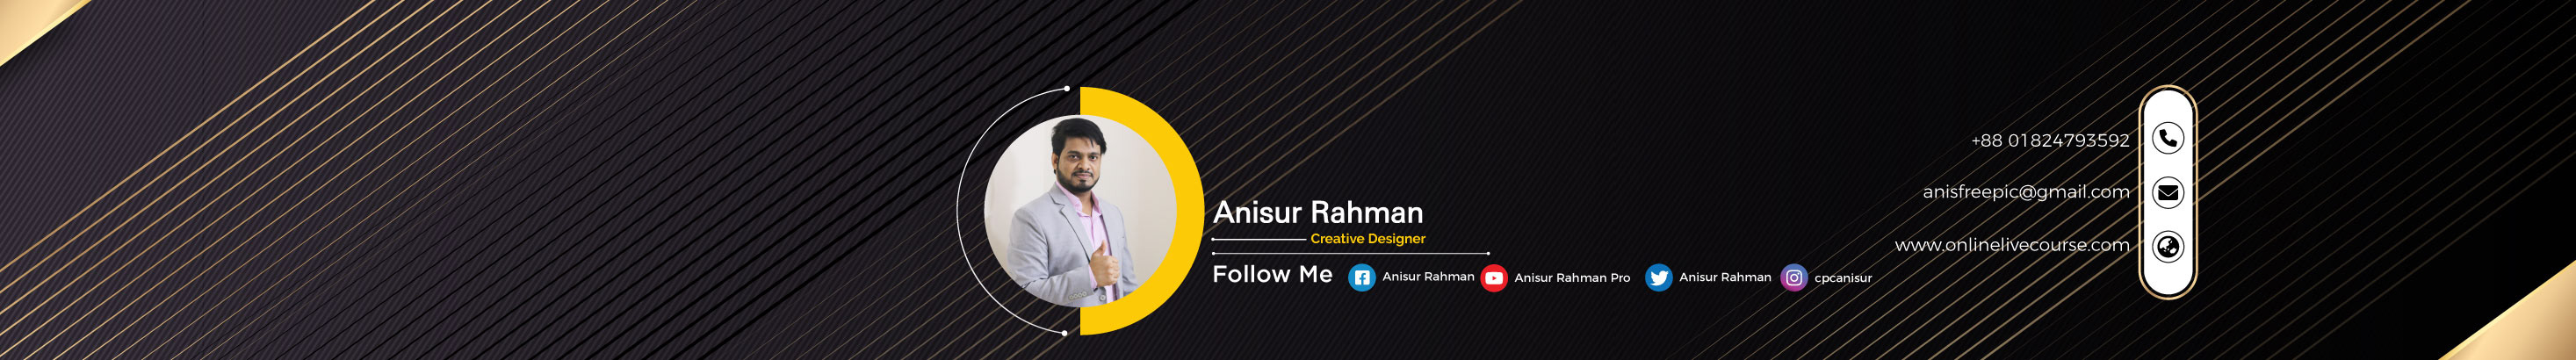 Anisur Rahmans profilbanner